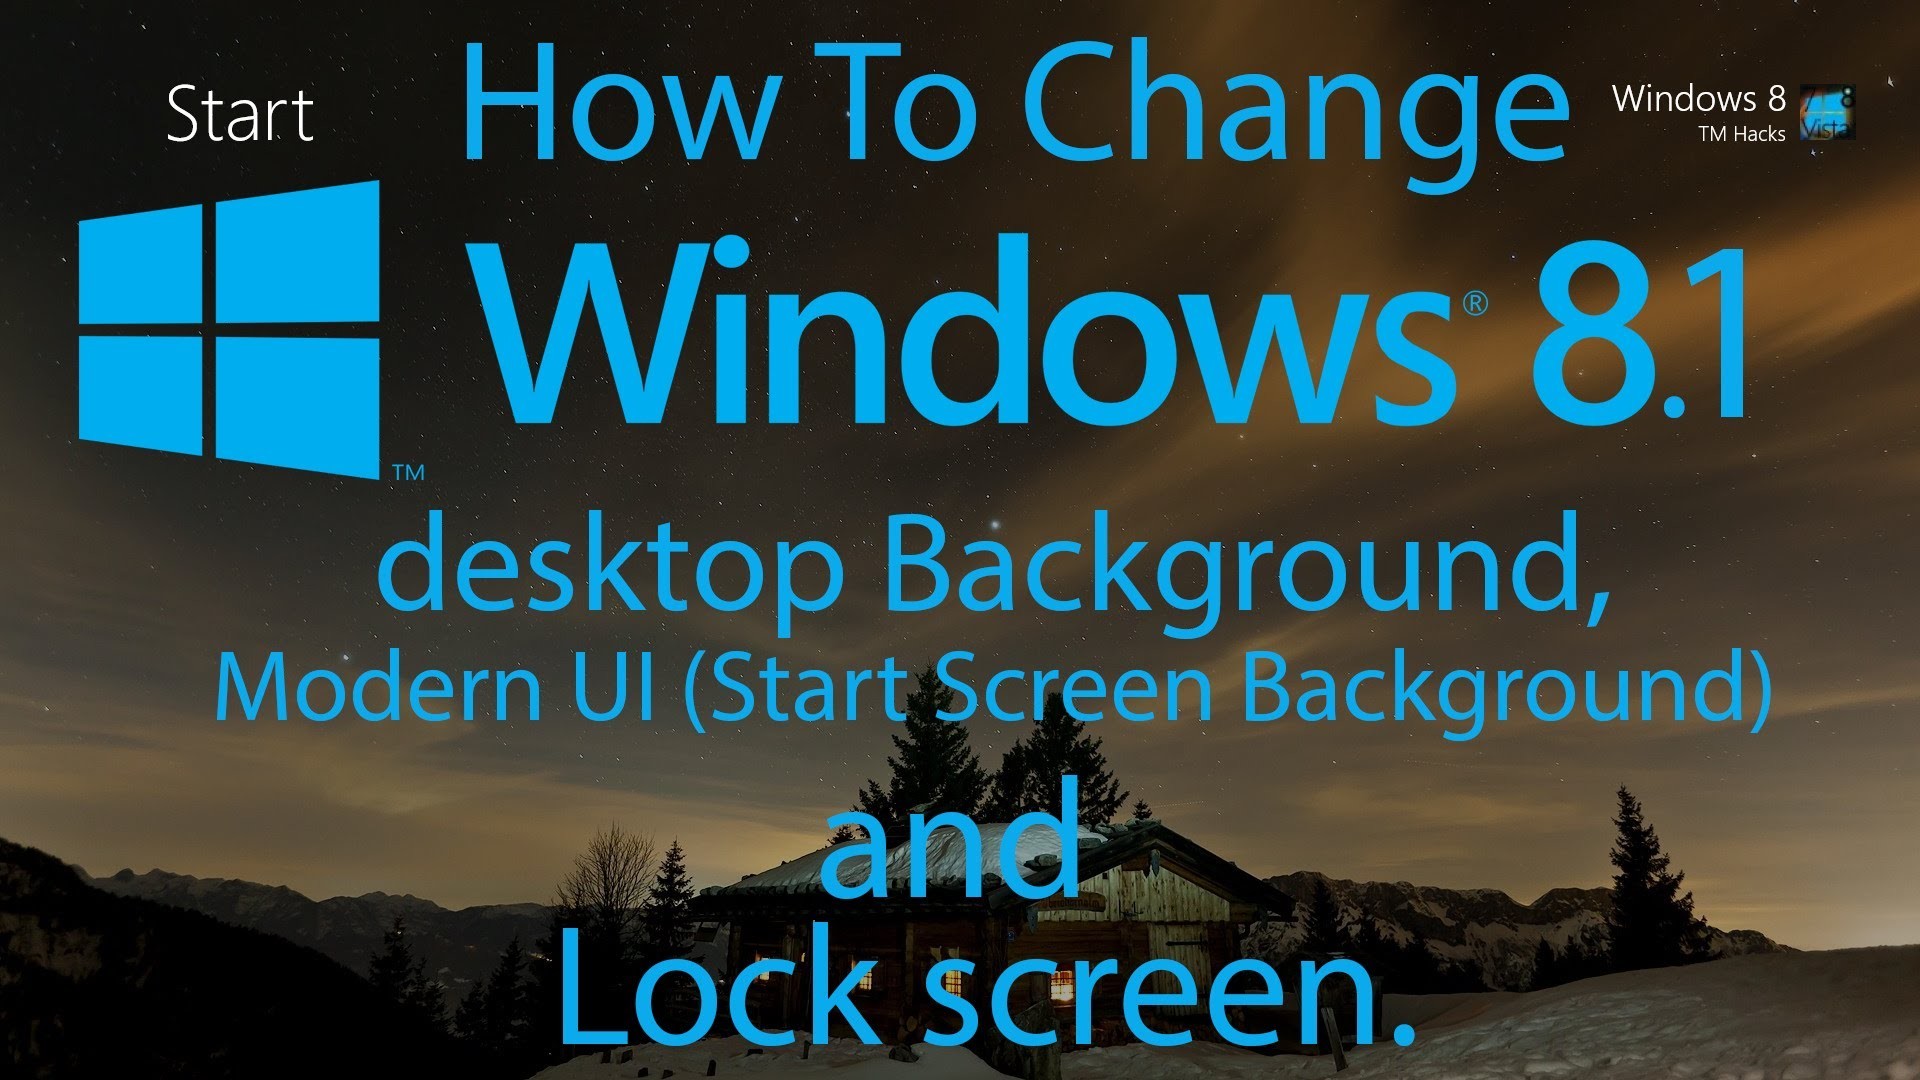 1920x1080 How To Change Windows 8.1 desktop Background, Modern UI (Start Screen  Background) and Lock screen. - YouTube